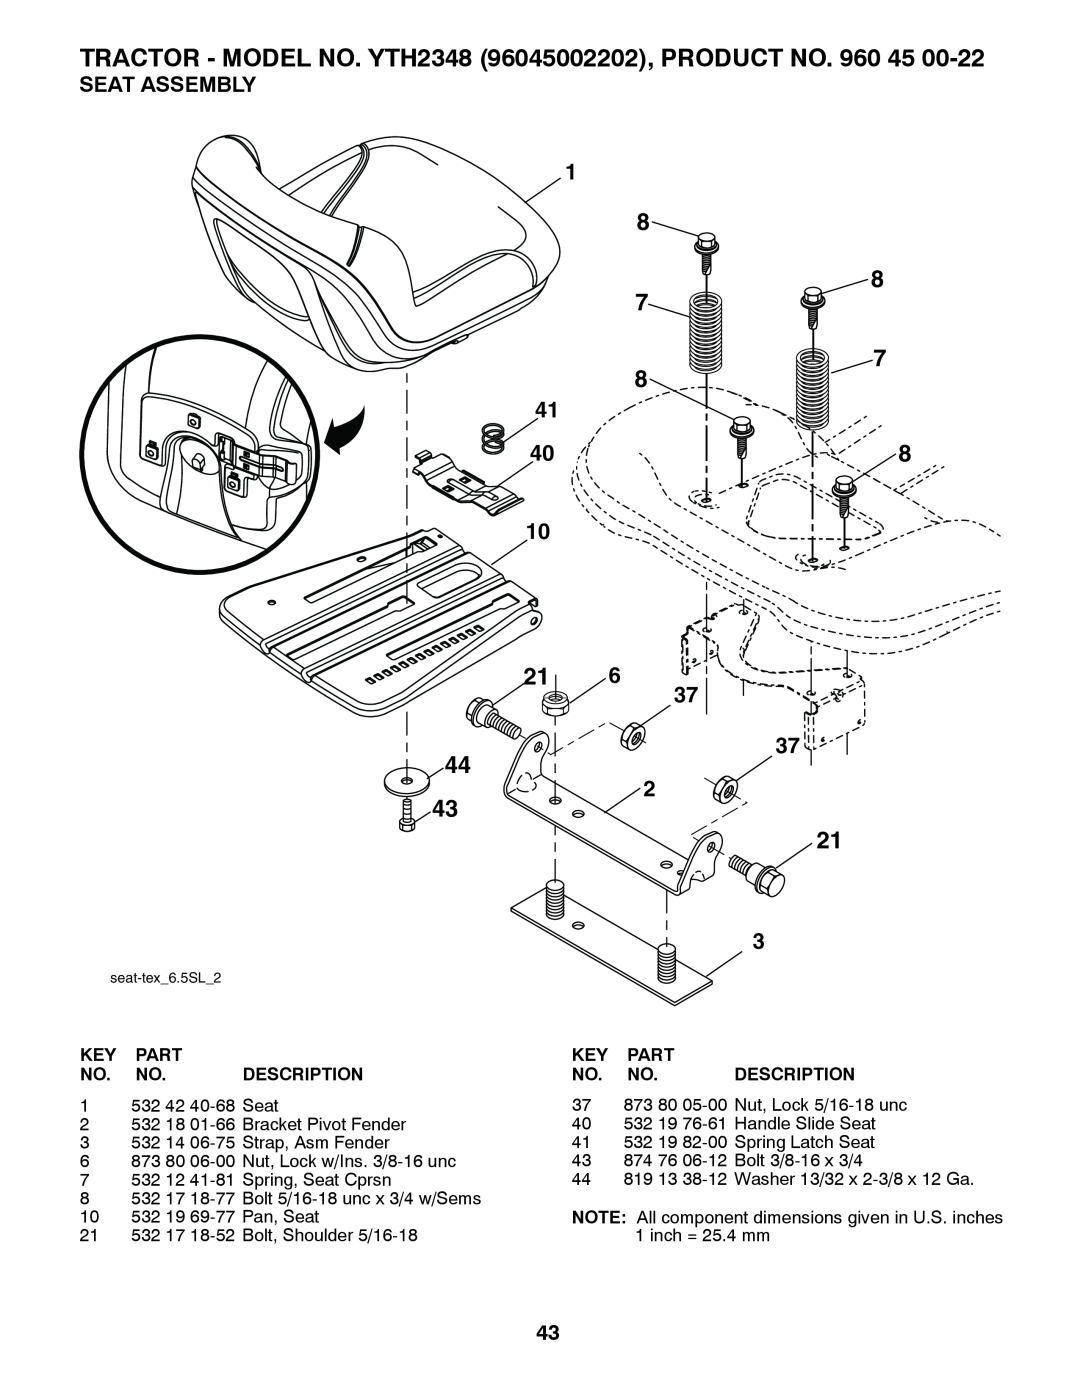 Husqvarna 532 43 65-03 Seat Assembly, TRACTOR - MODEL NO. YTH2348 96045002202, PRODUCT NO. 960, Part, Description 